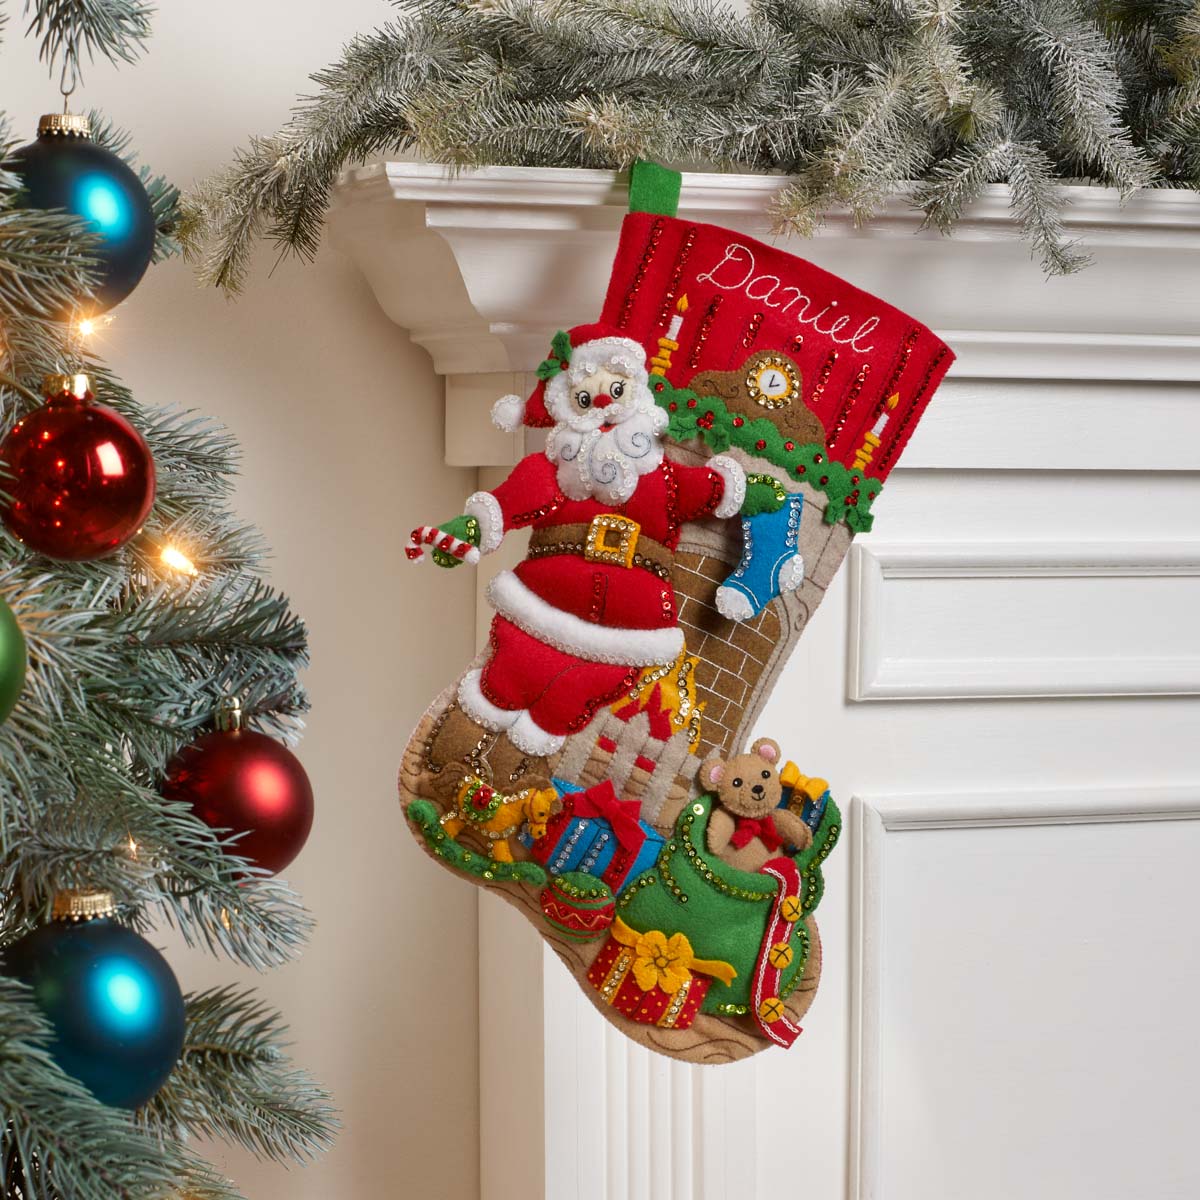 Bucilla ® Seasonal - Felt - Stocking Kits - Fireplace Santa - 89455E